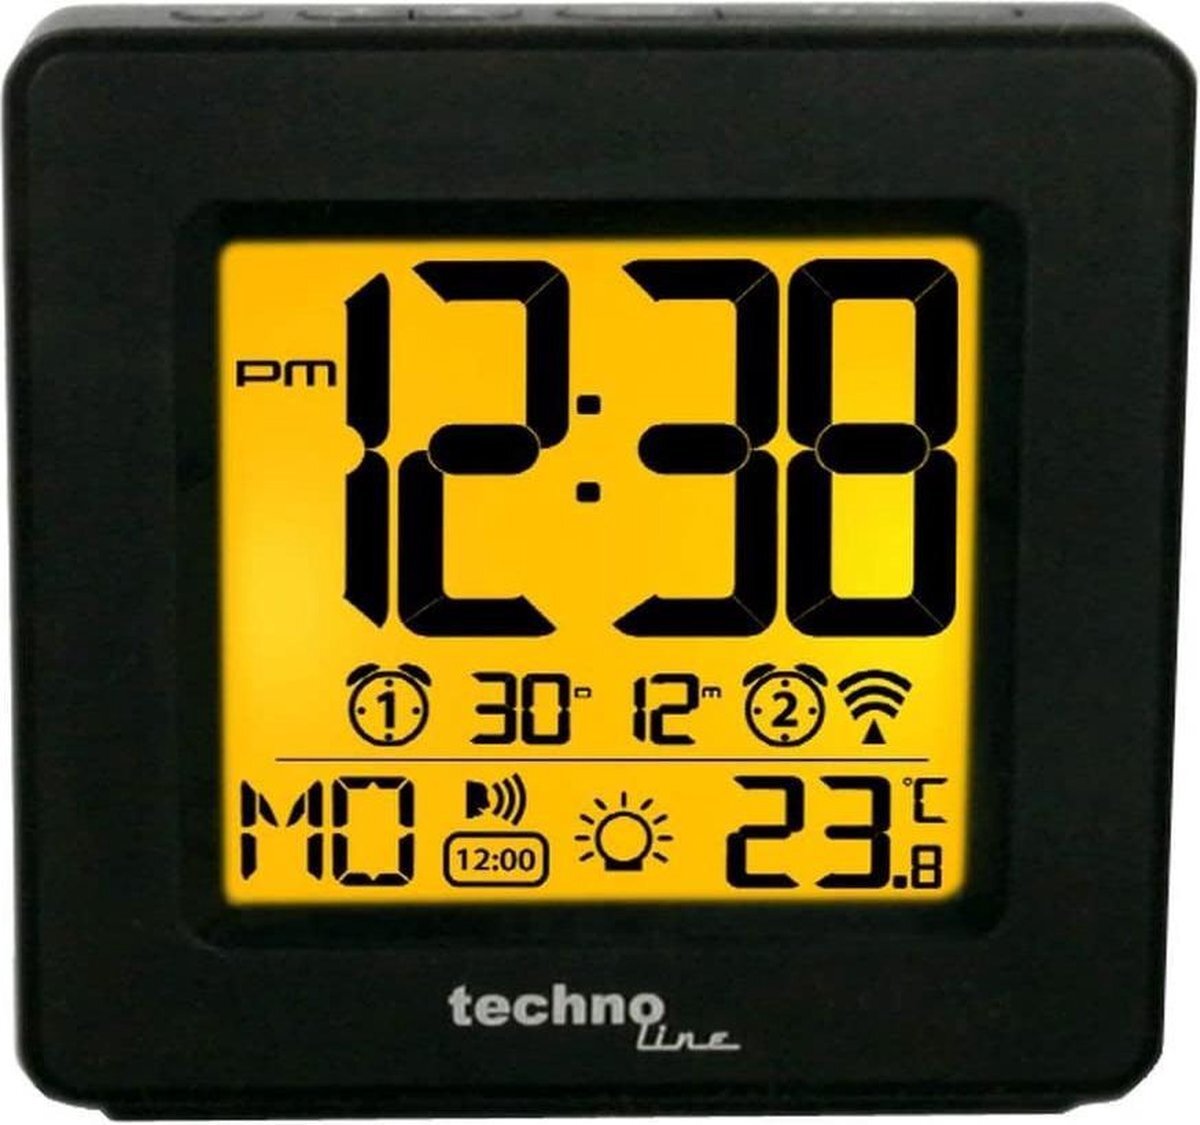 technoline Wekker - Datum - Temperatuur - WT 330